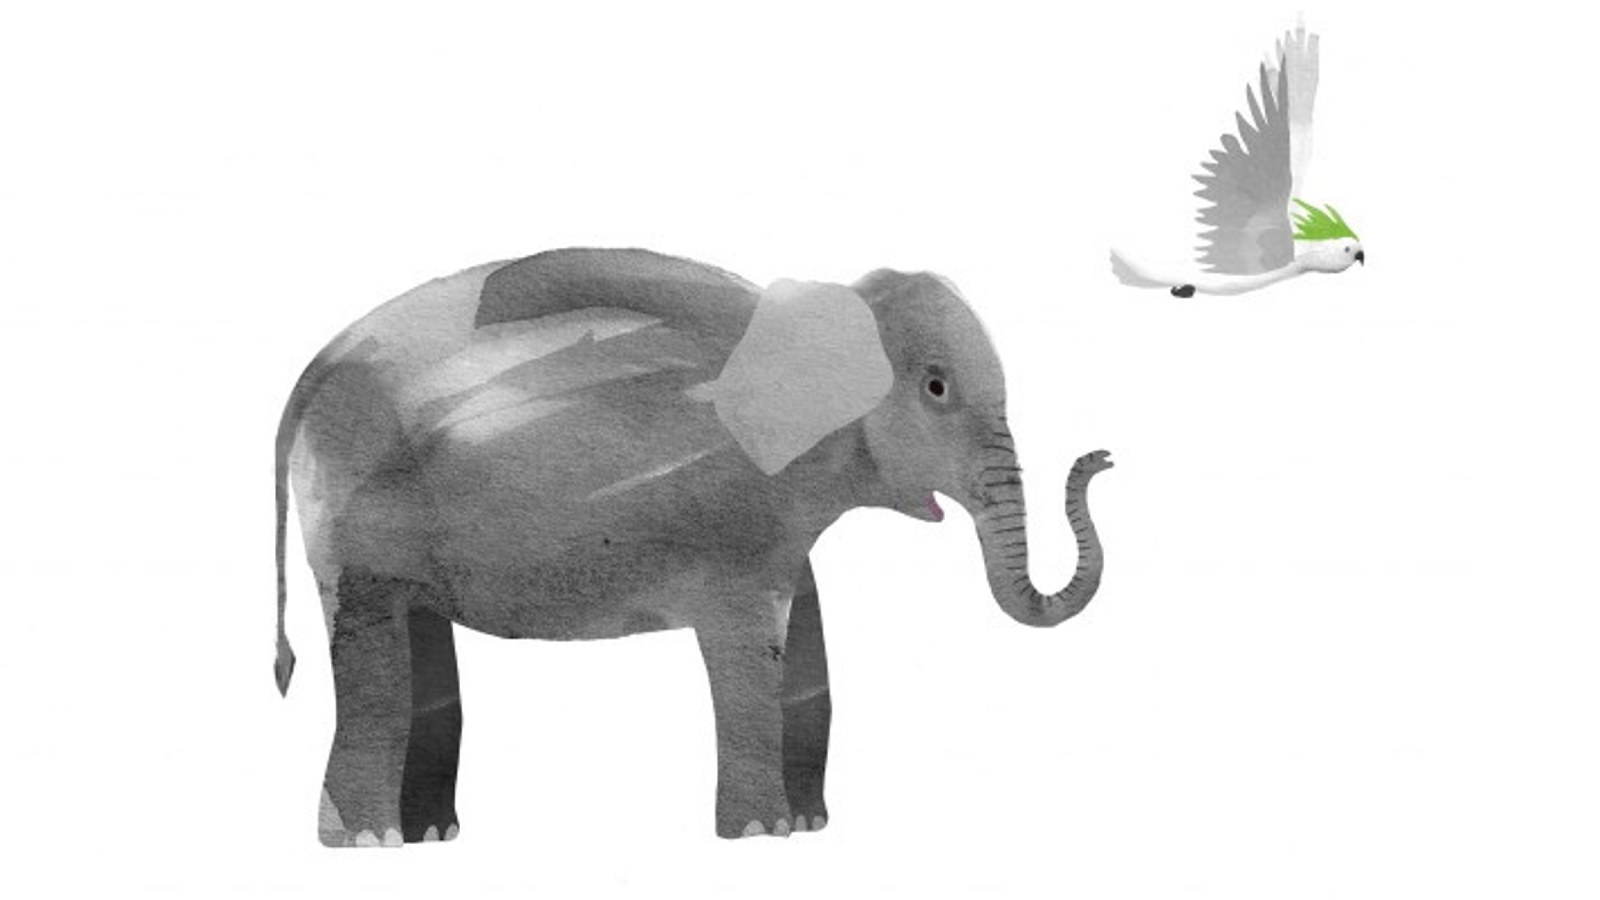 Illustration of elephant and cockatoo